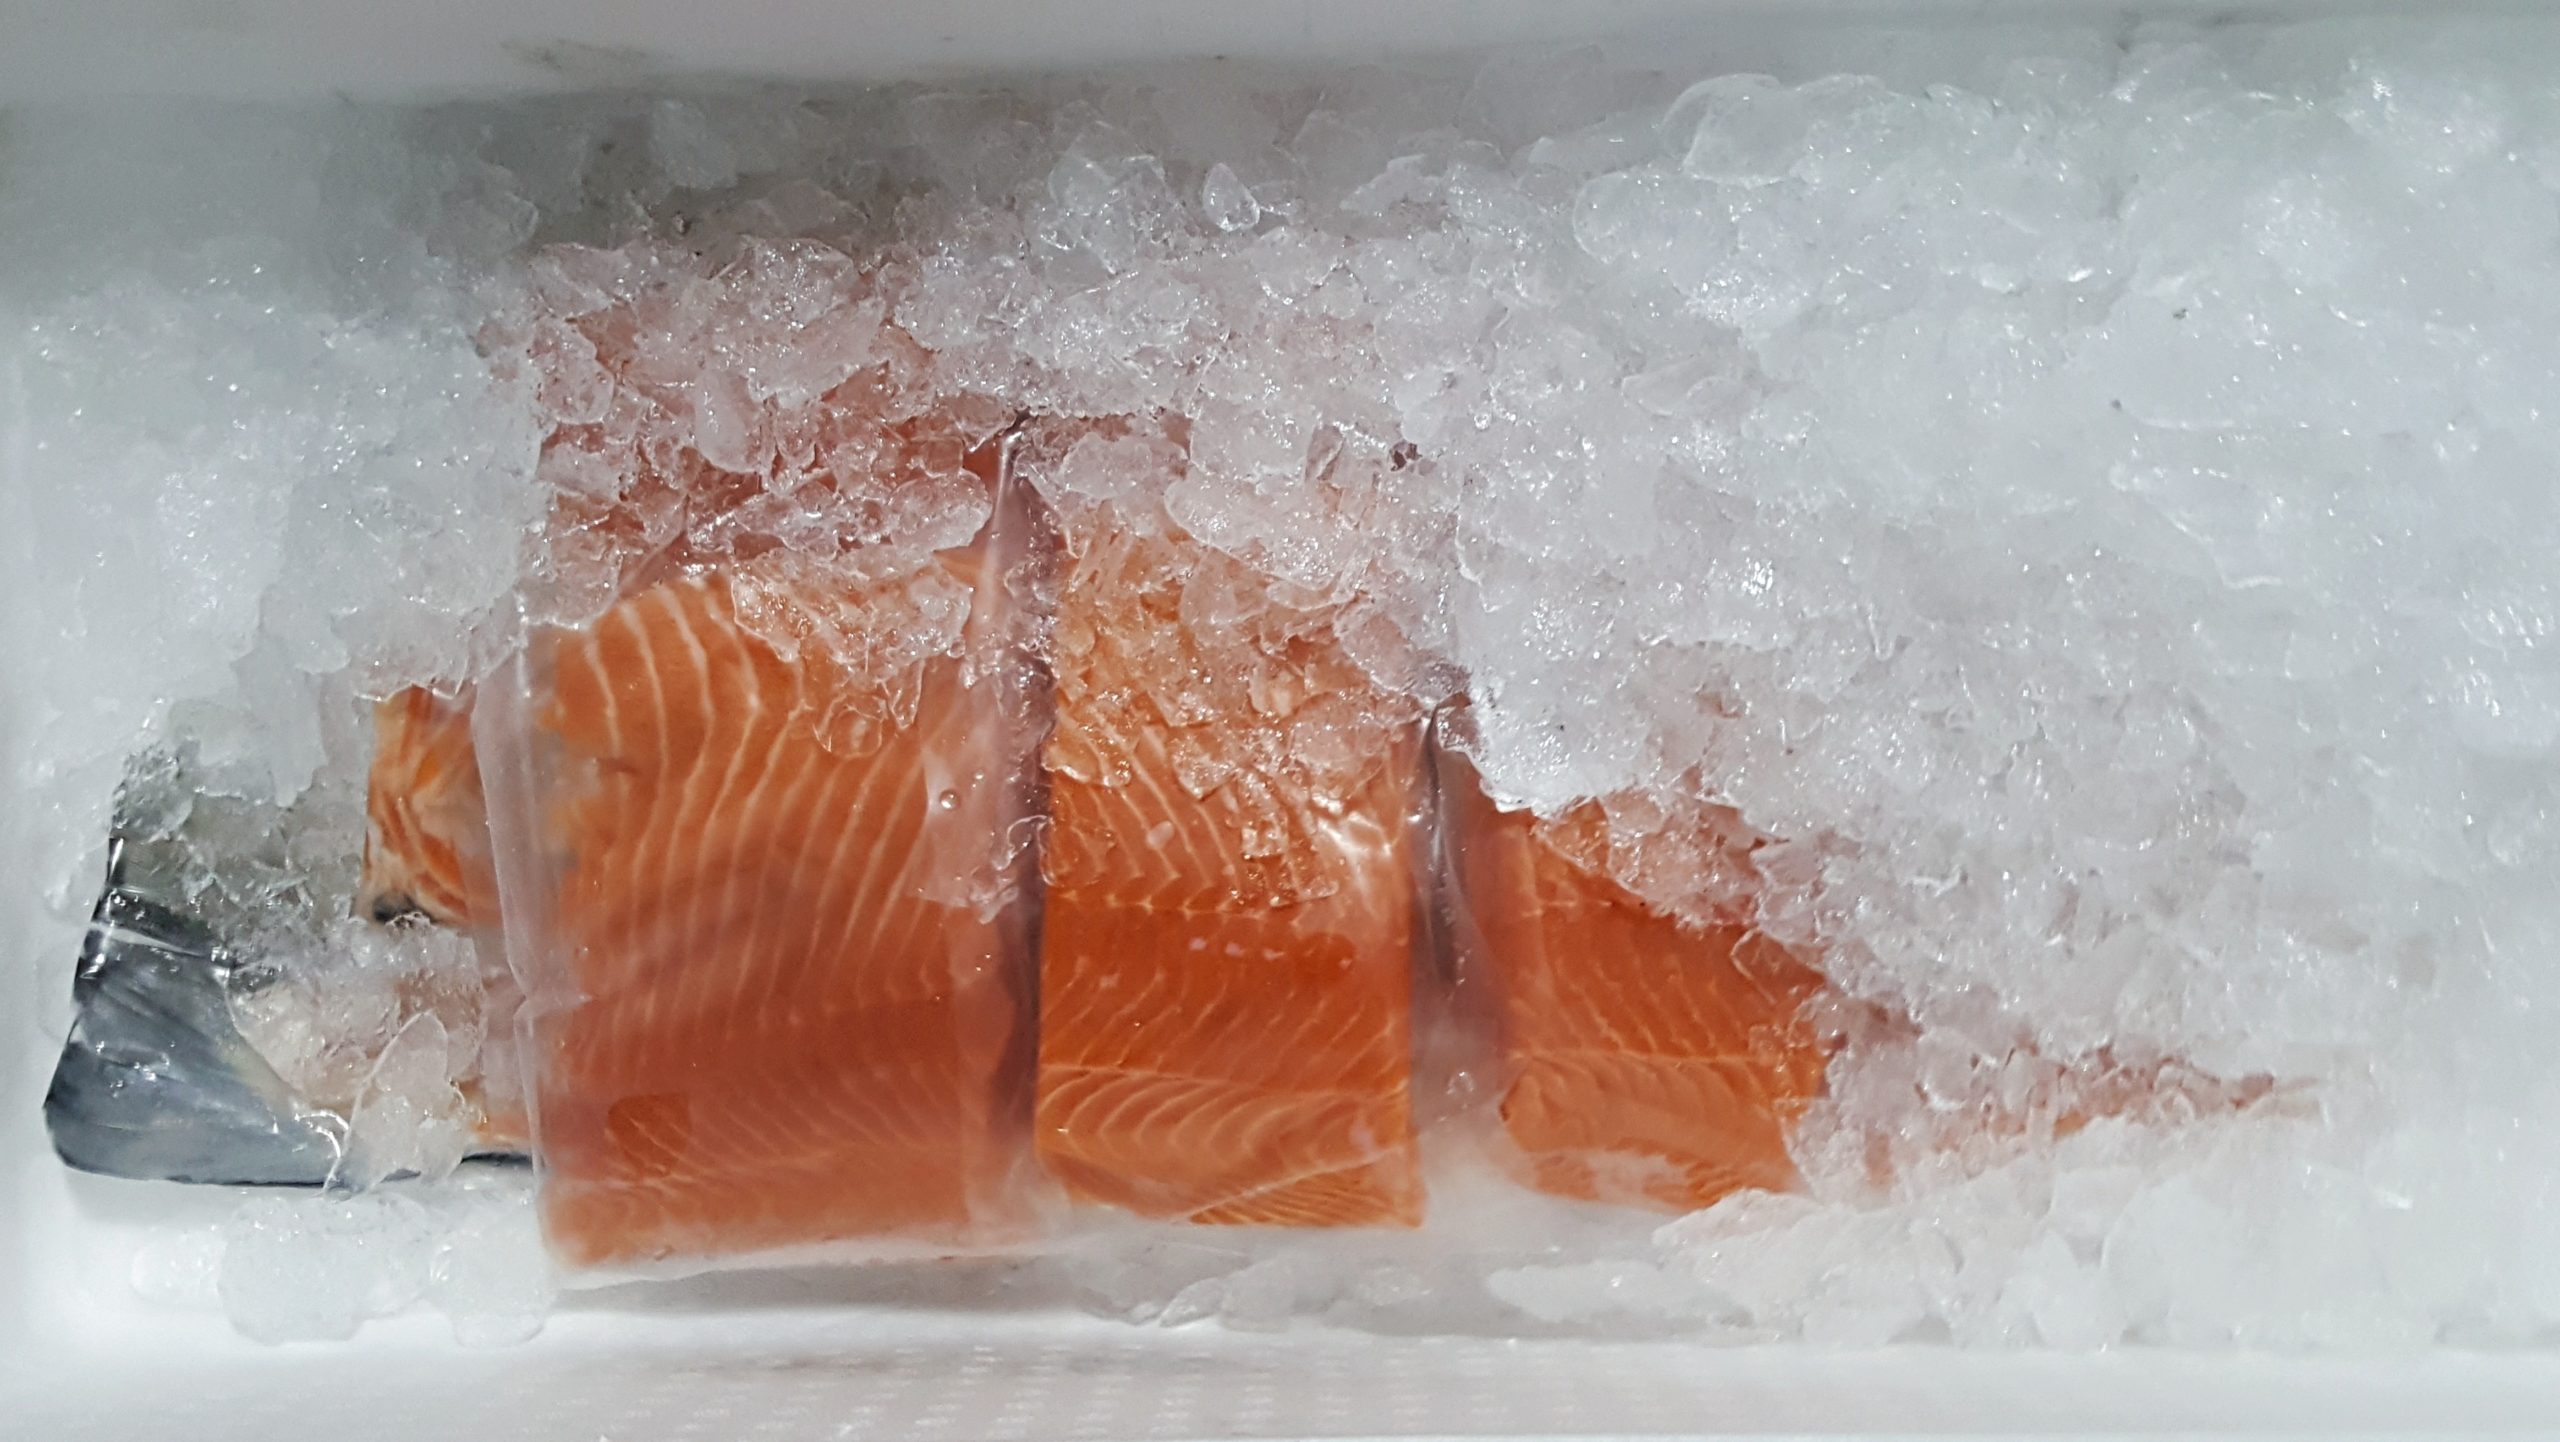 Norway salmon fillet on ice